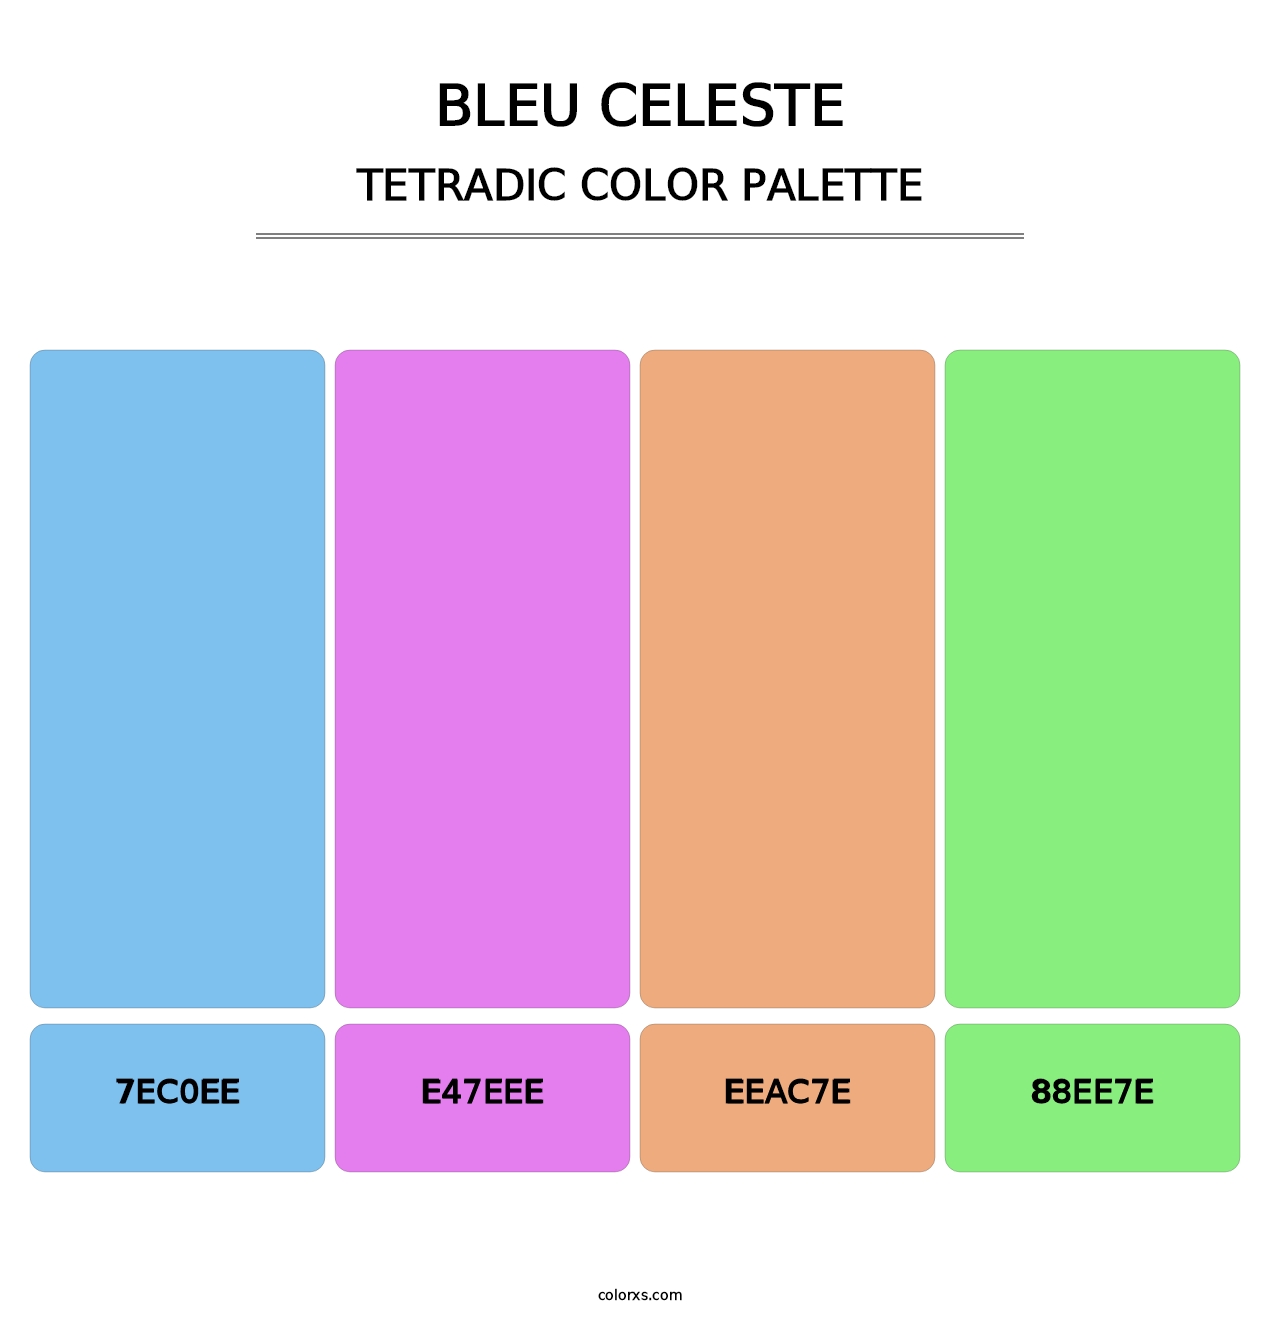 Bleu Celeste - Tetradic Color Palette